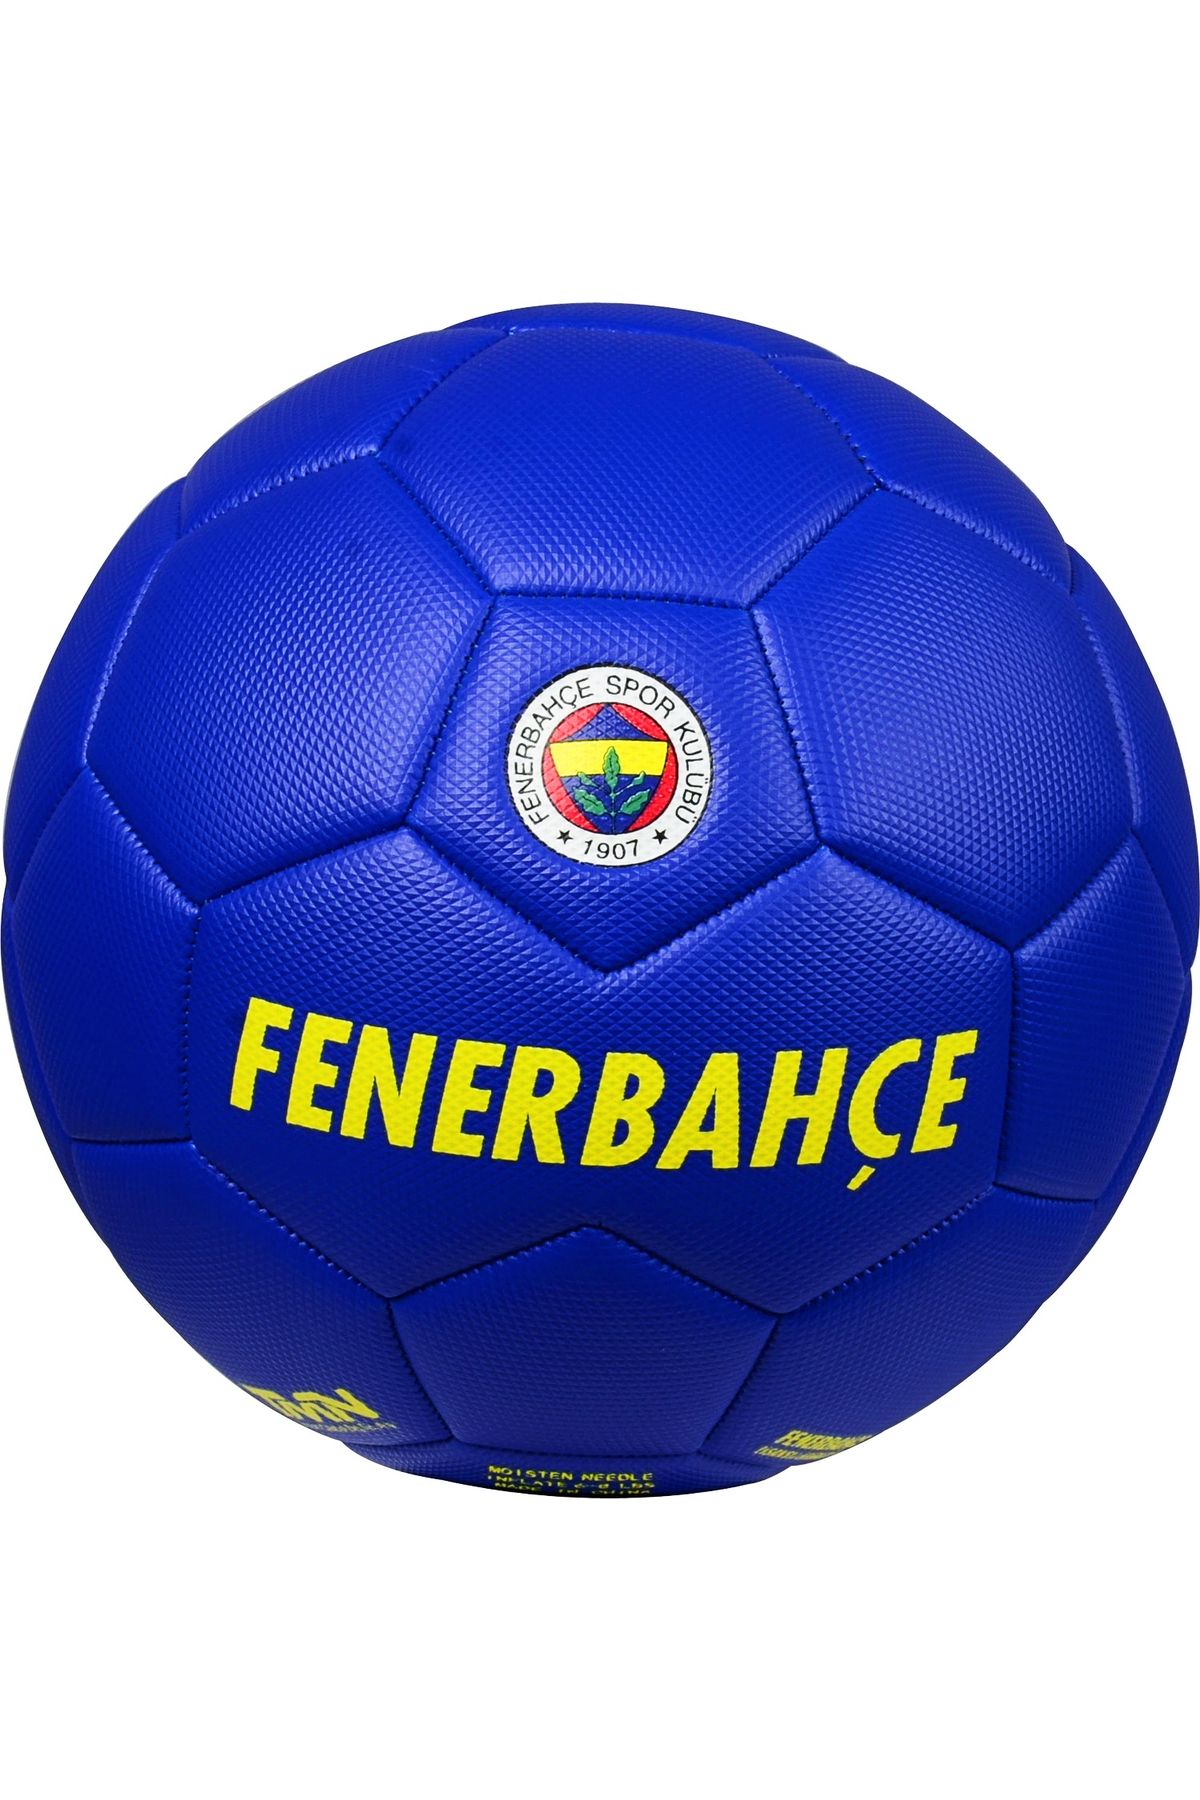 Fenerbahçe Orjinal Lisanslı Futbol Topu No 5 Taraftar Topu